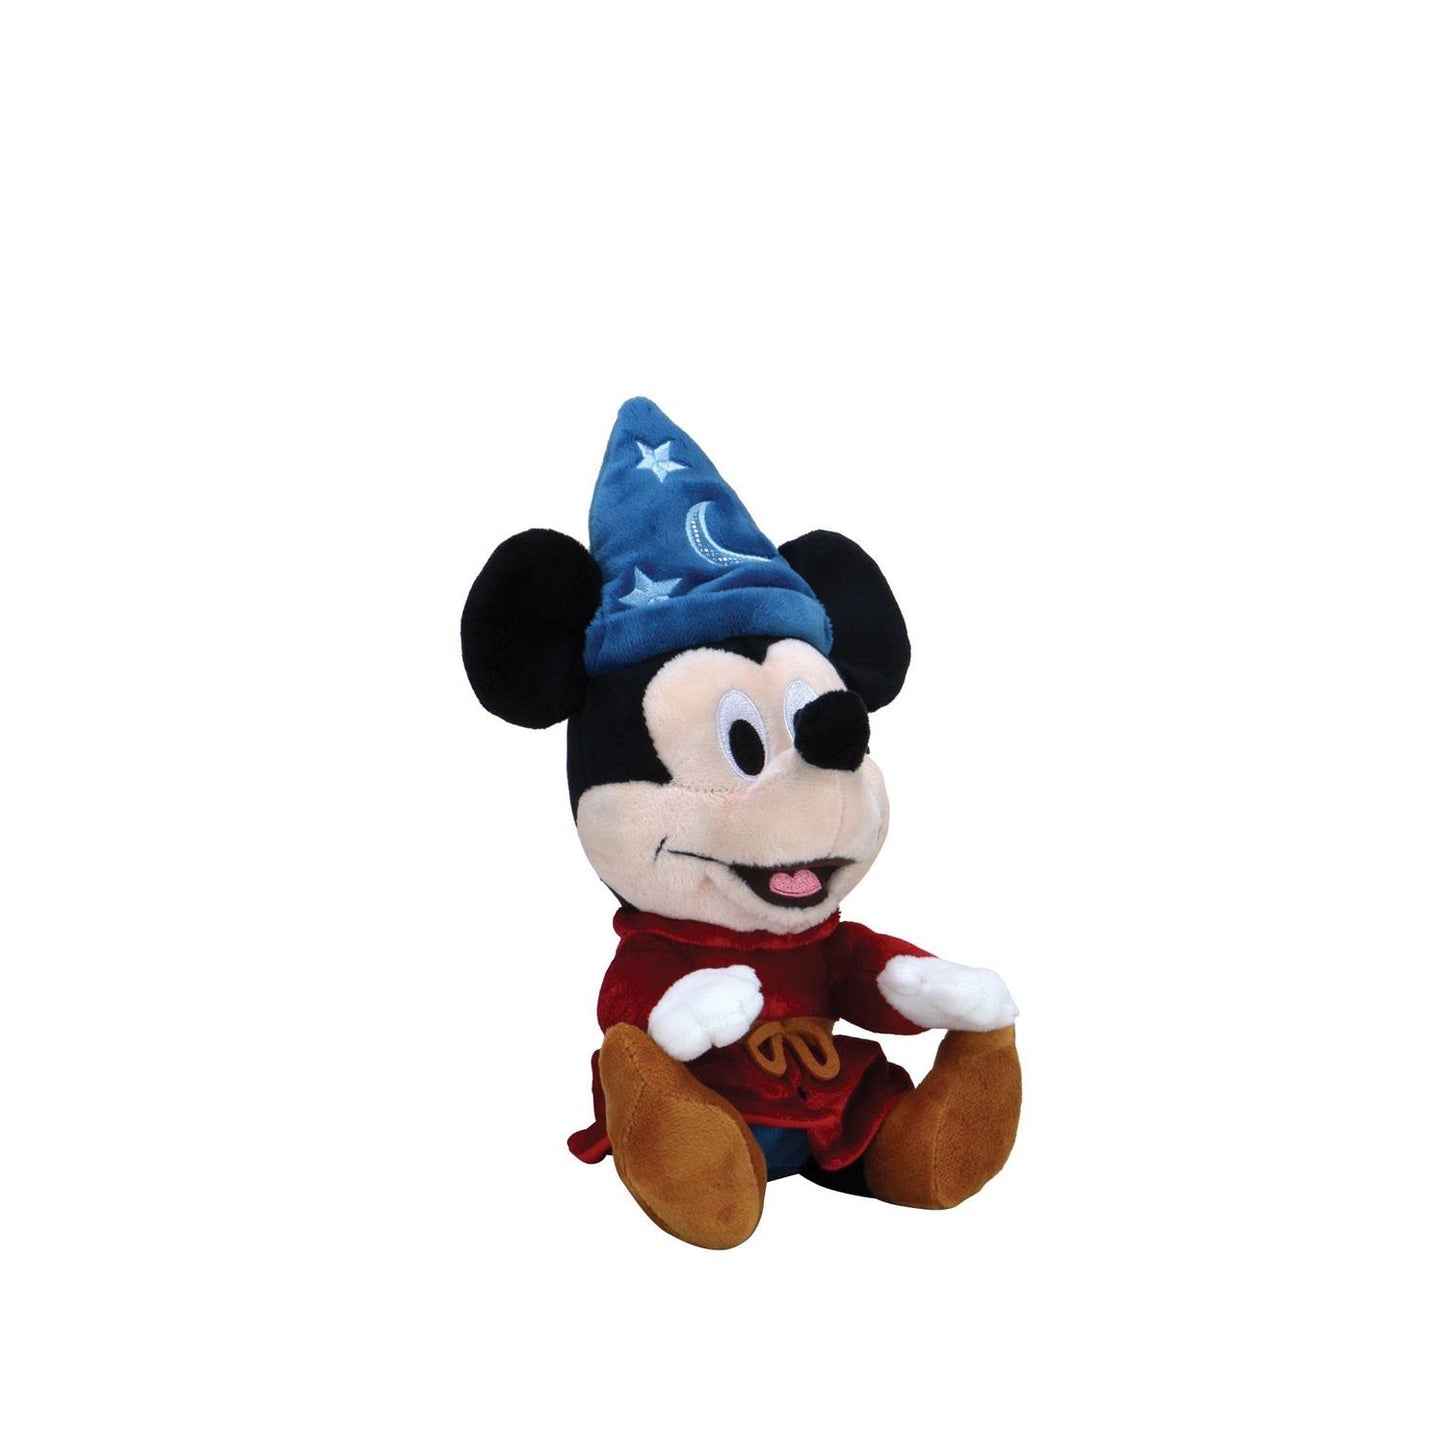 Fantasia Mickey Mouse Phunny Plush